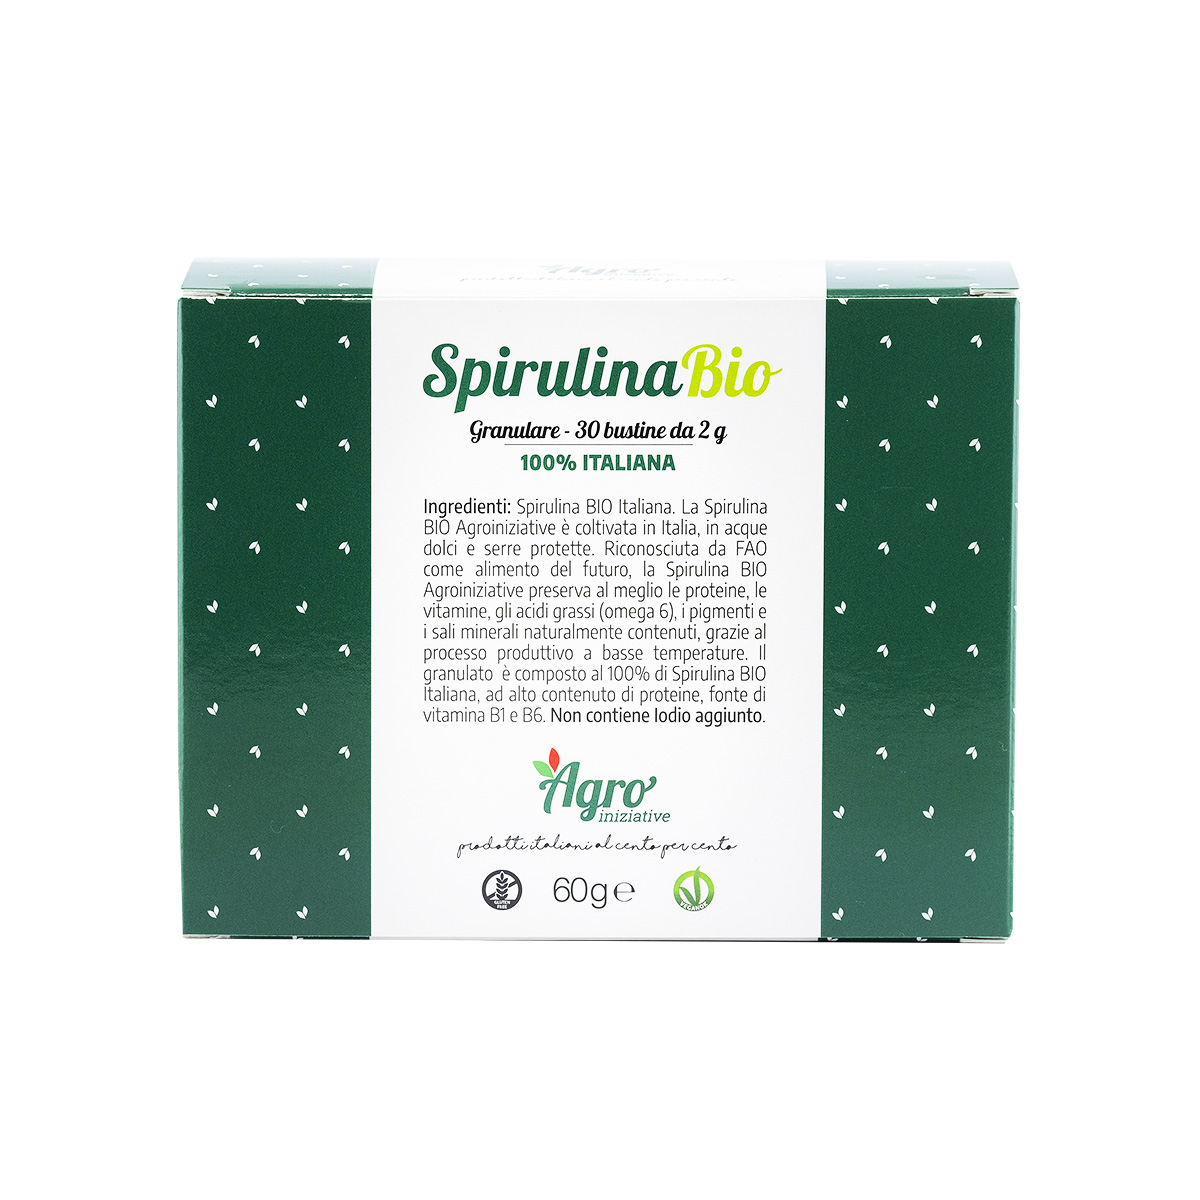 Spirulina granulare Biologica Made in italy